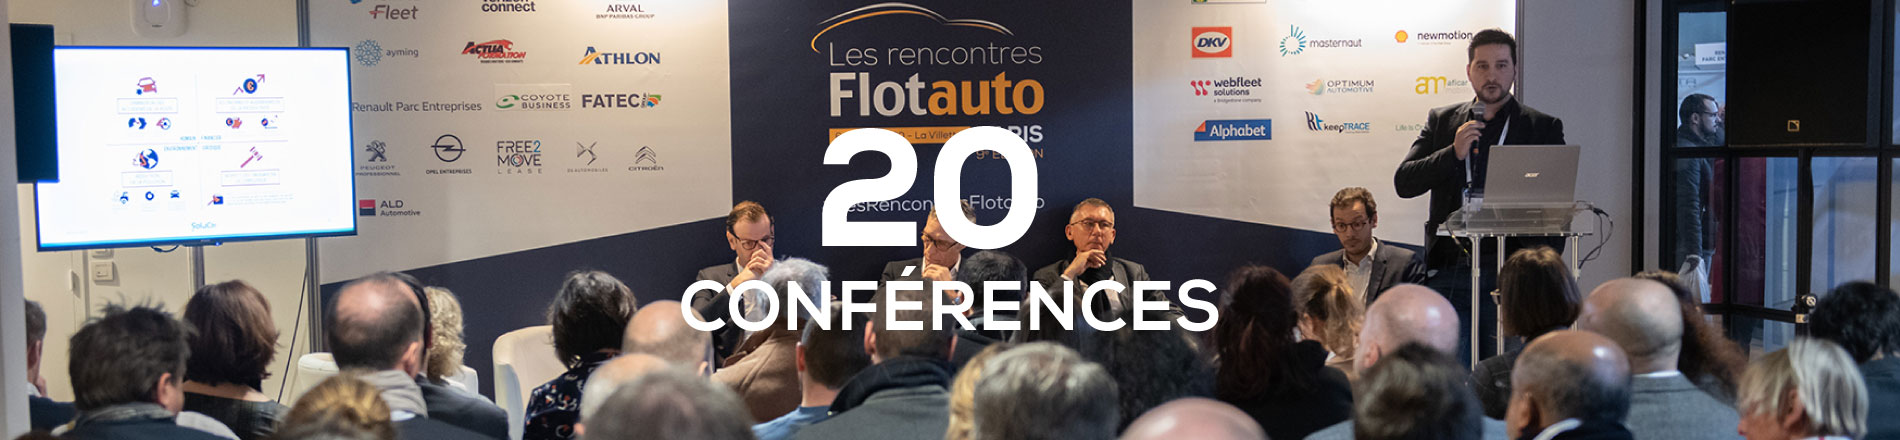 Rencontres Flotauto 2019